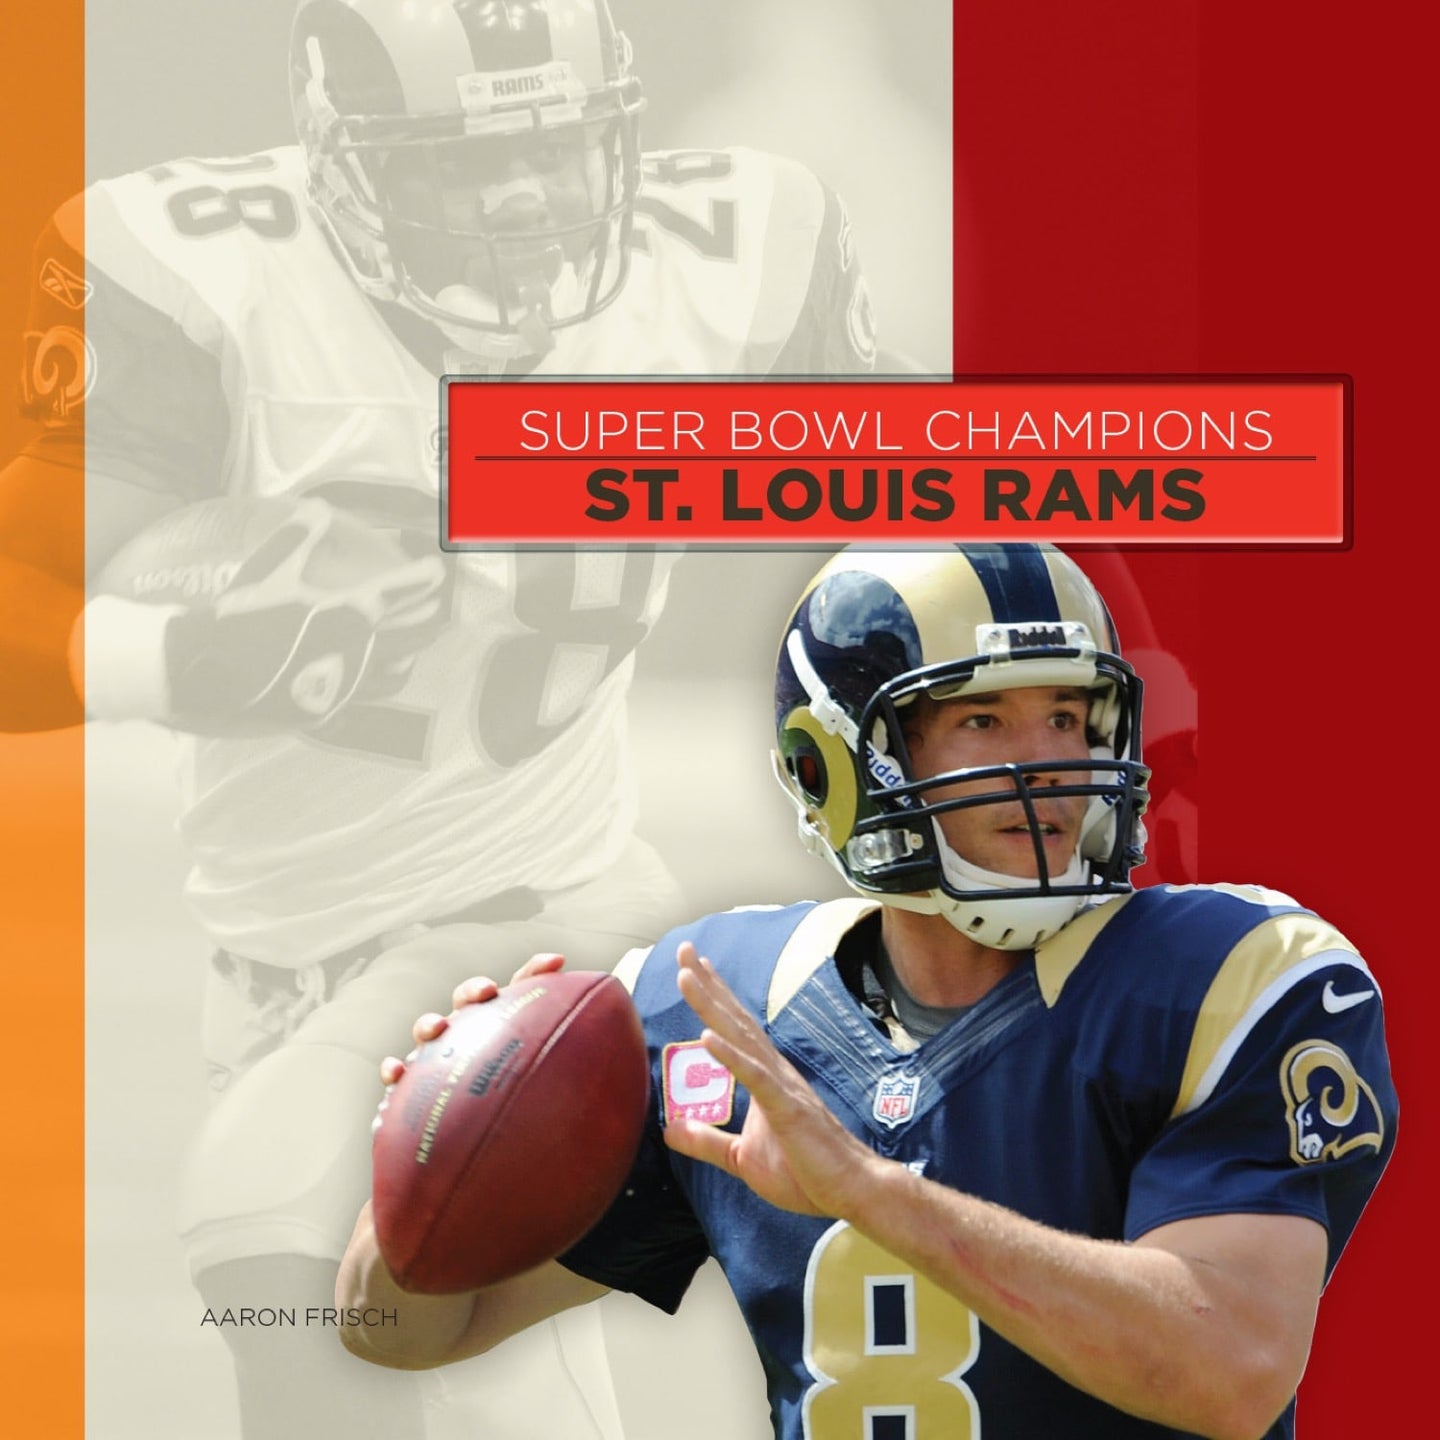 Super Bowl Champions: St. Louis Rams (2014)